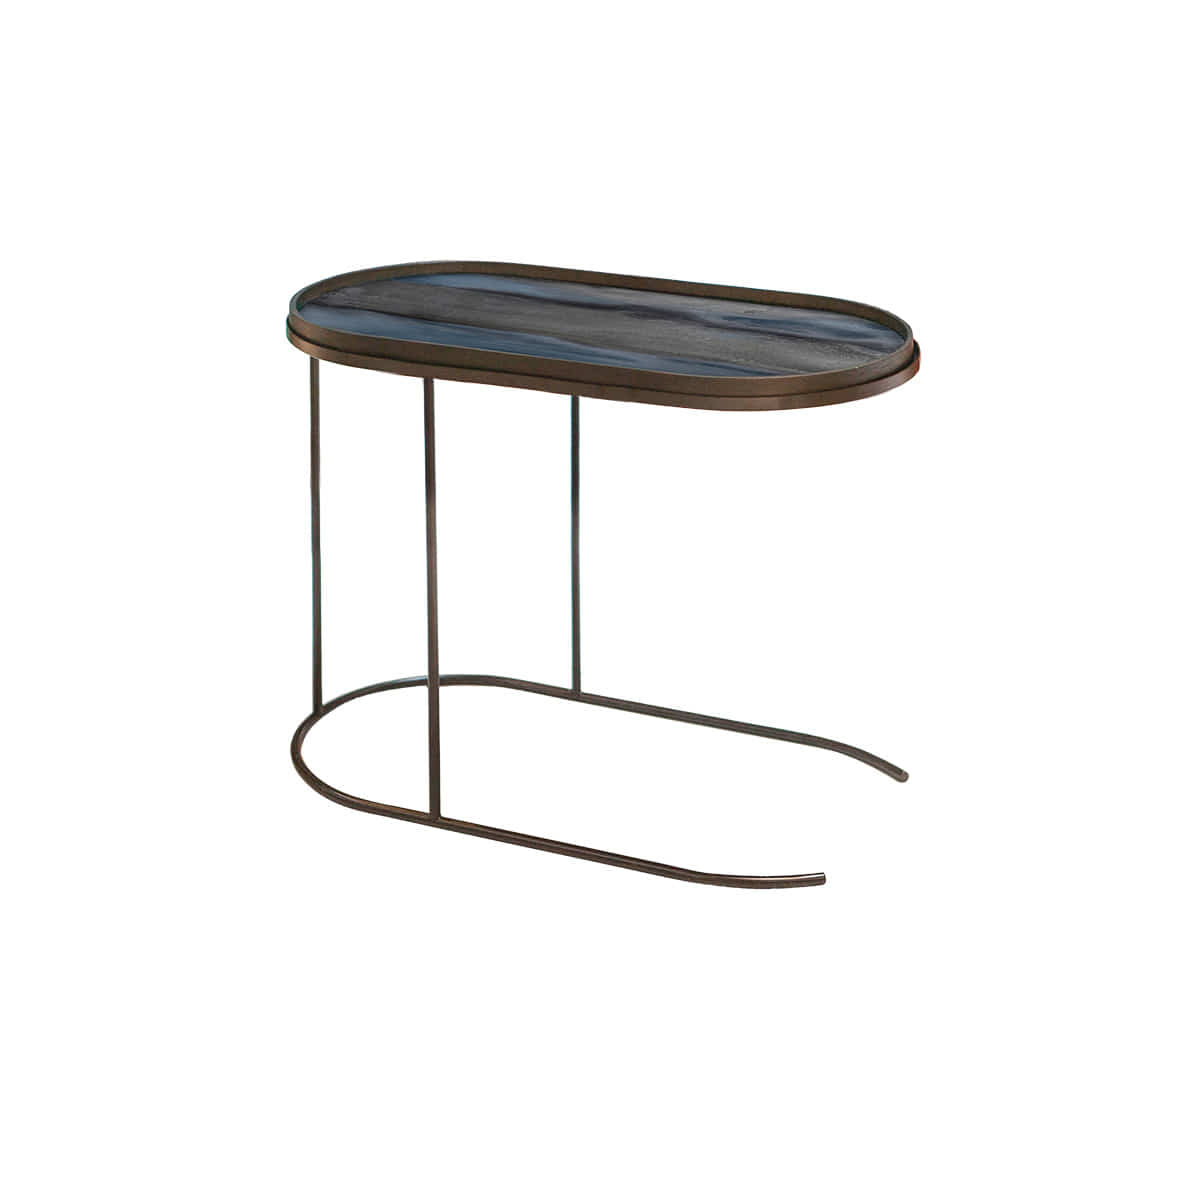 ETHNICRAFT Oval Tray Table 타원 트레이 테이블 (우드&amp;글라스)TRAY BY ETHNICRAFT,BELGIUM